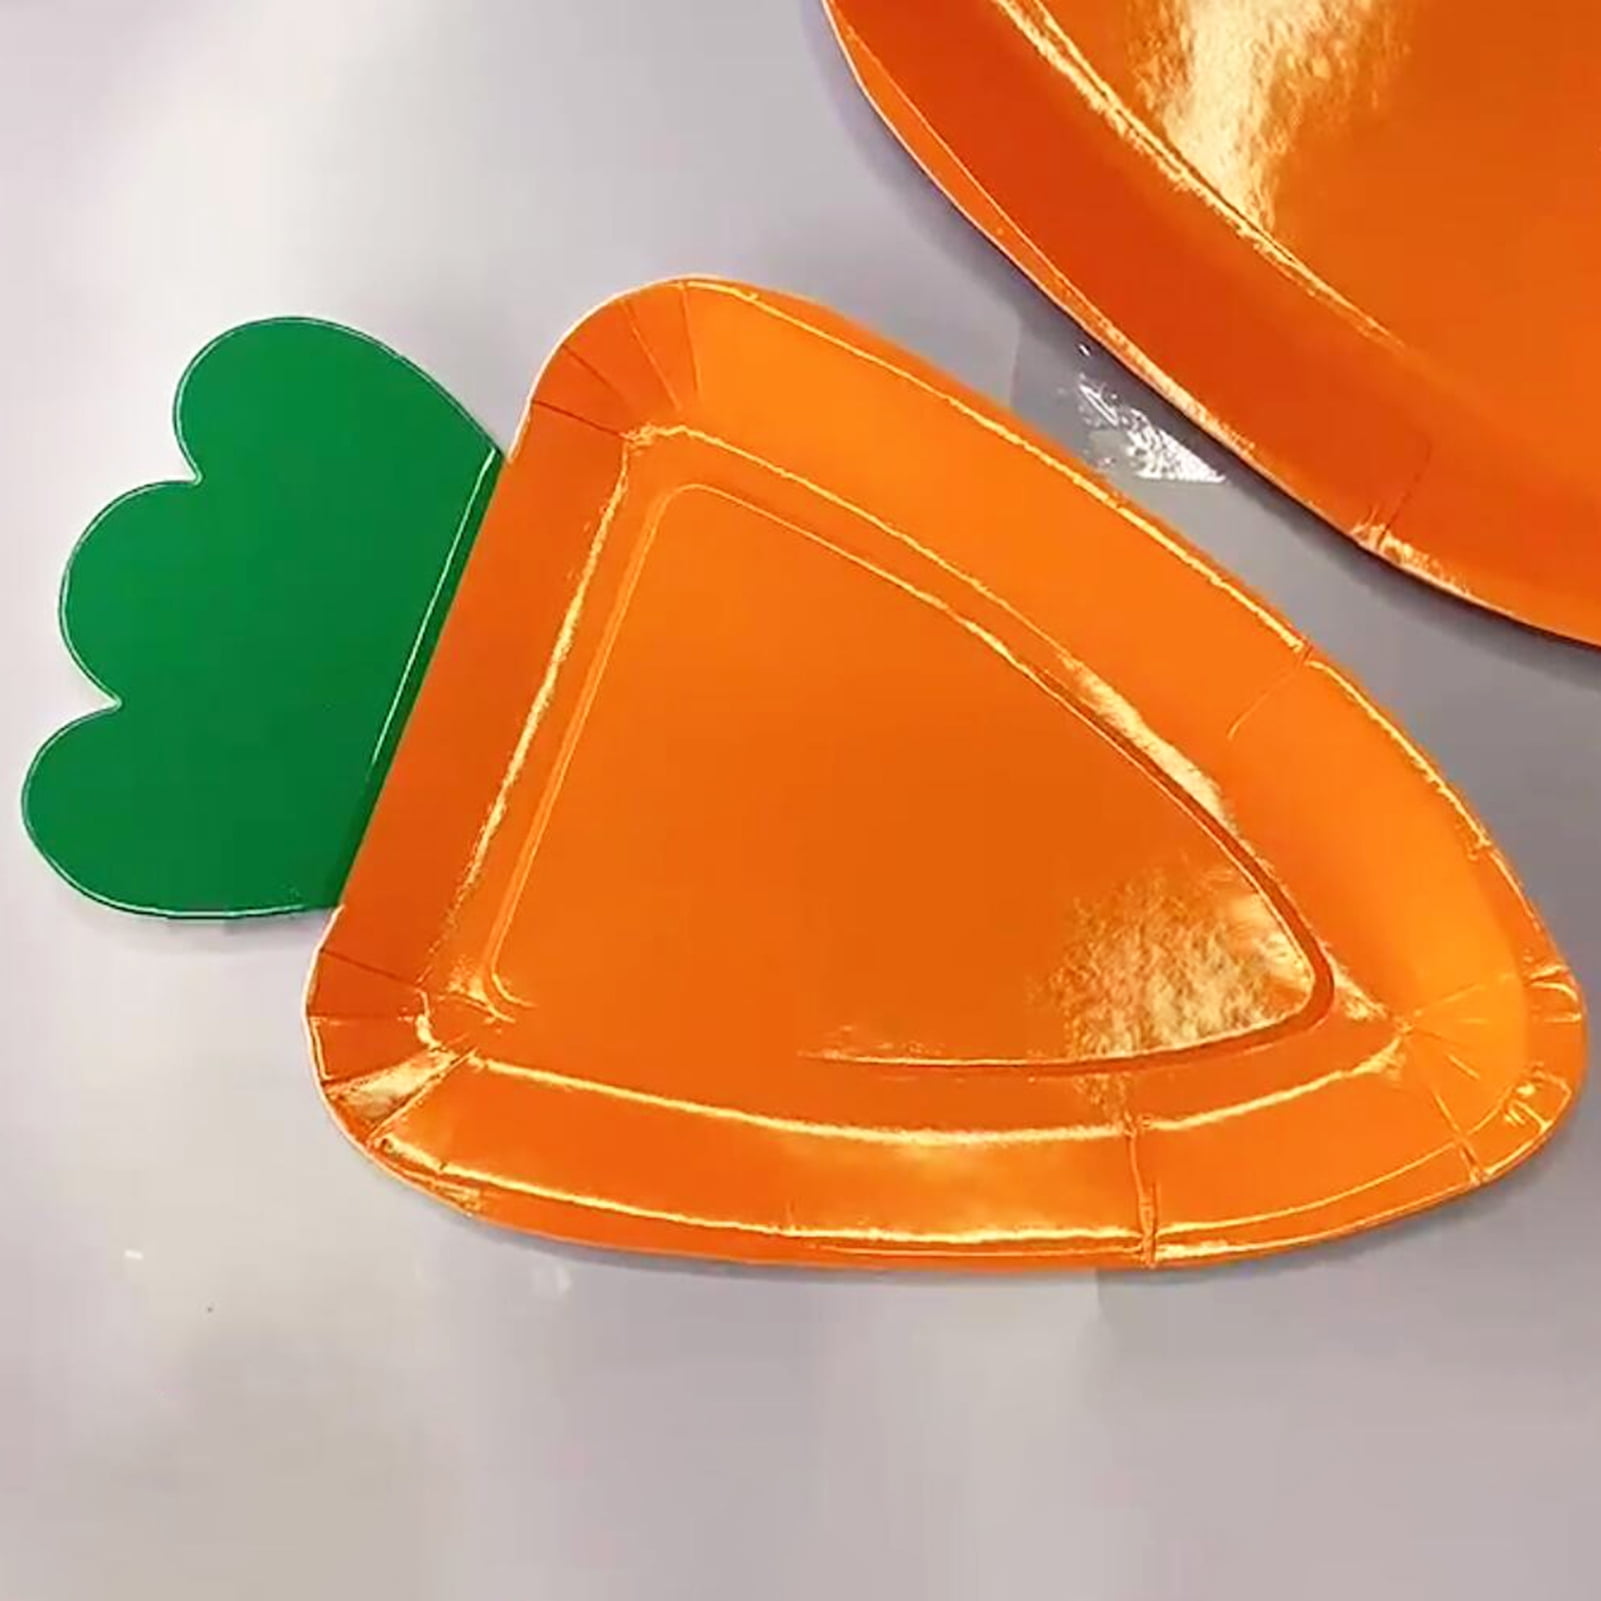 Hesroicy 8Pcs Paper Plates Carrot Shape Cartoon Disposable